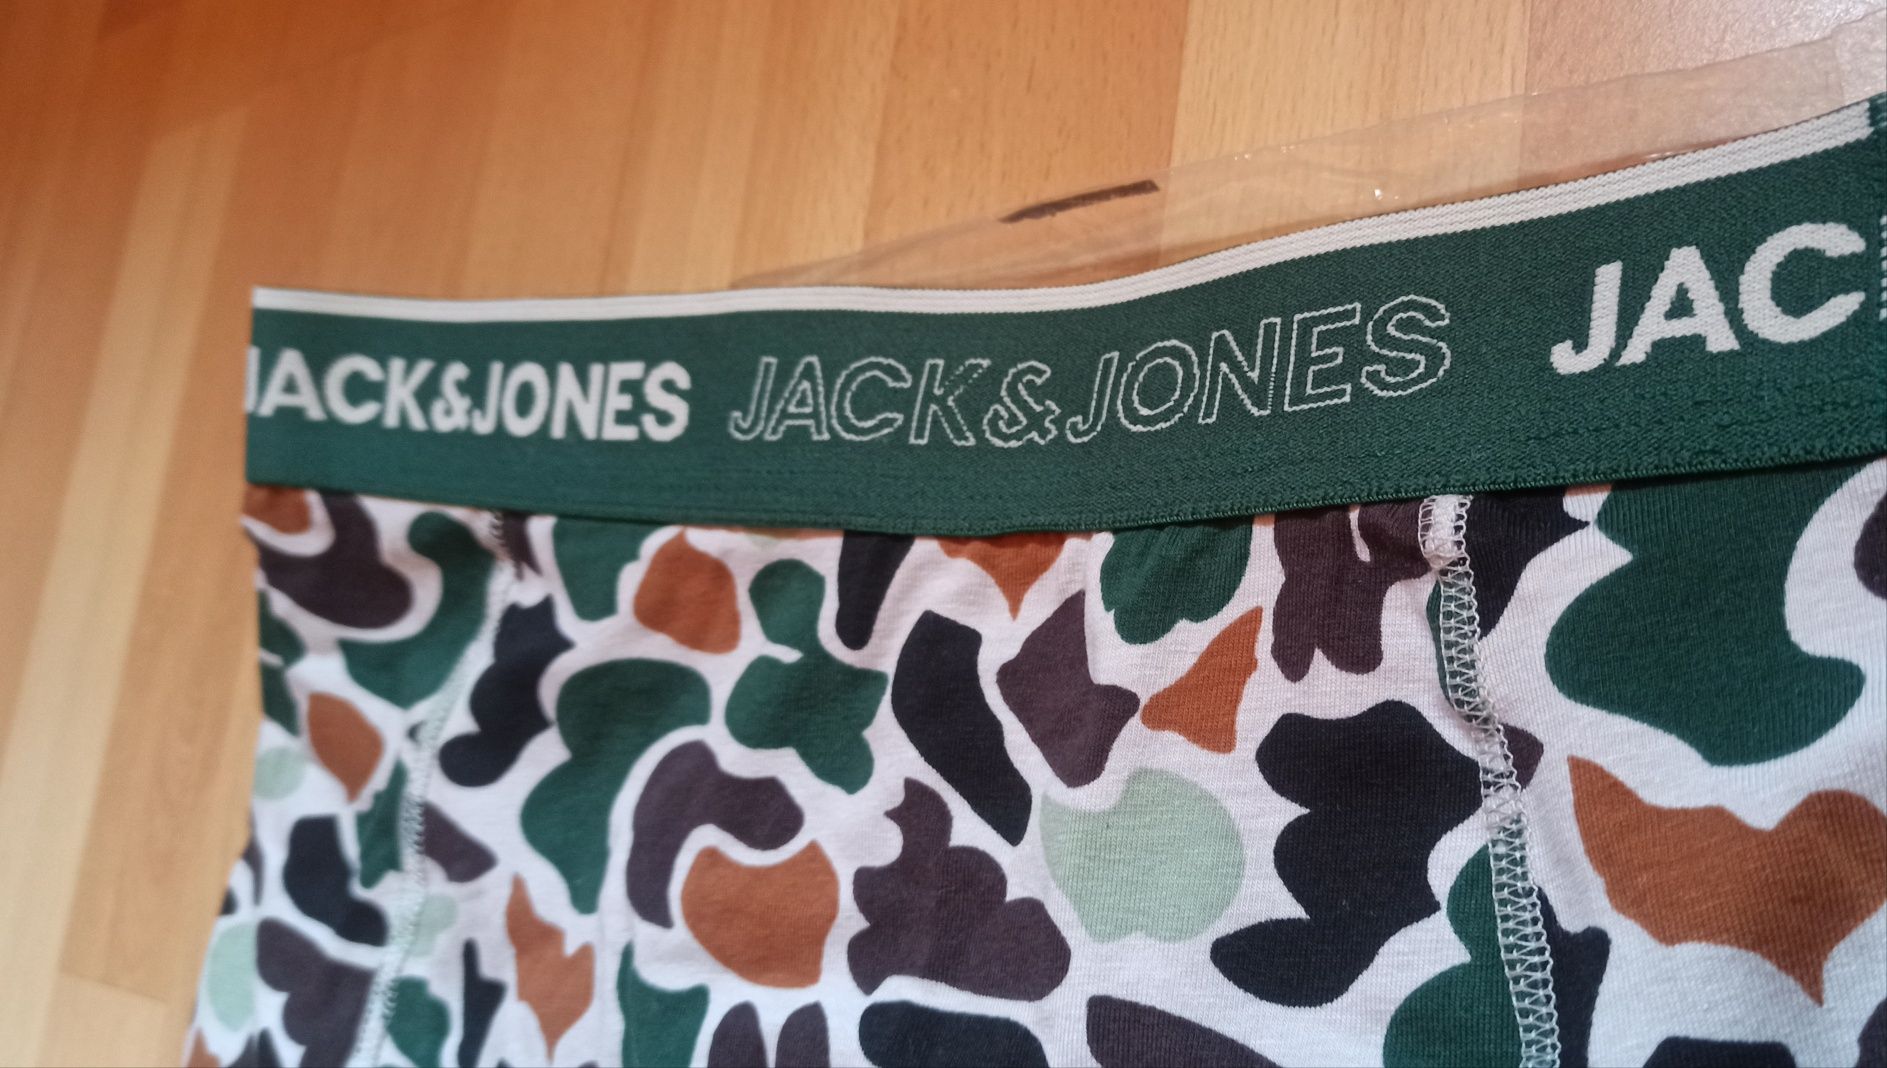 Bokserki Jack&Jones- Men's Boxers Size M